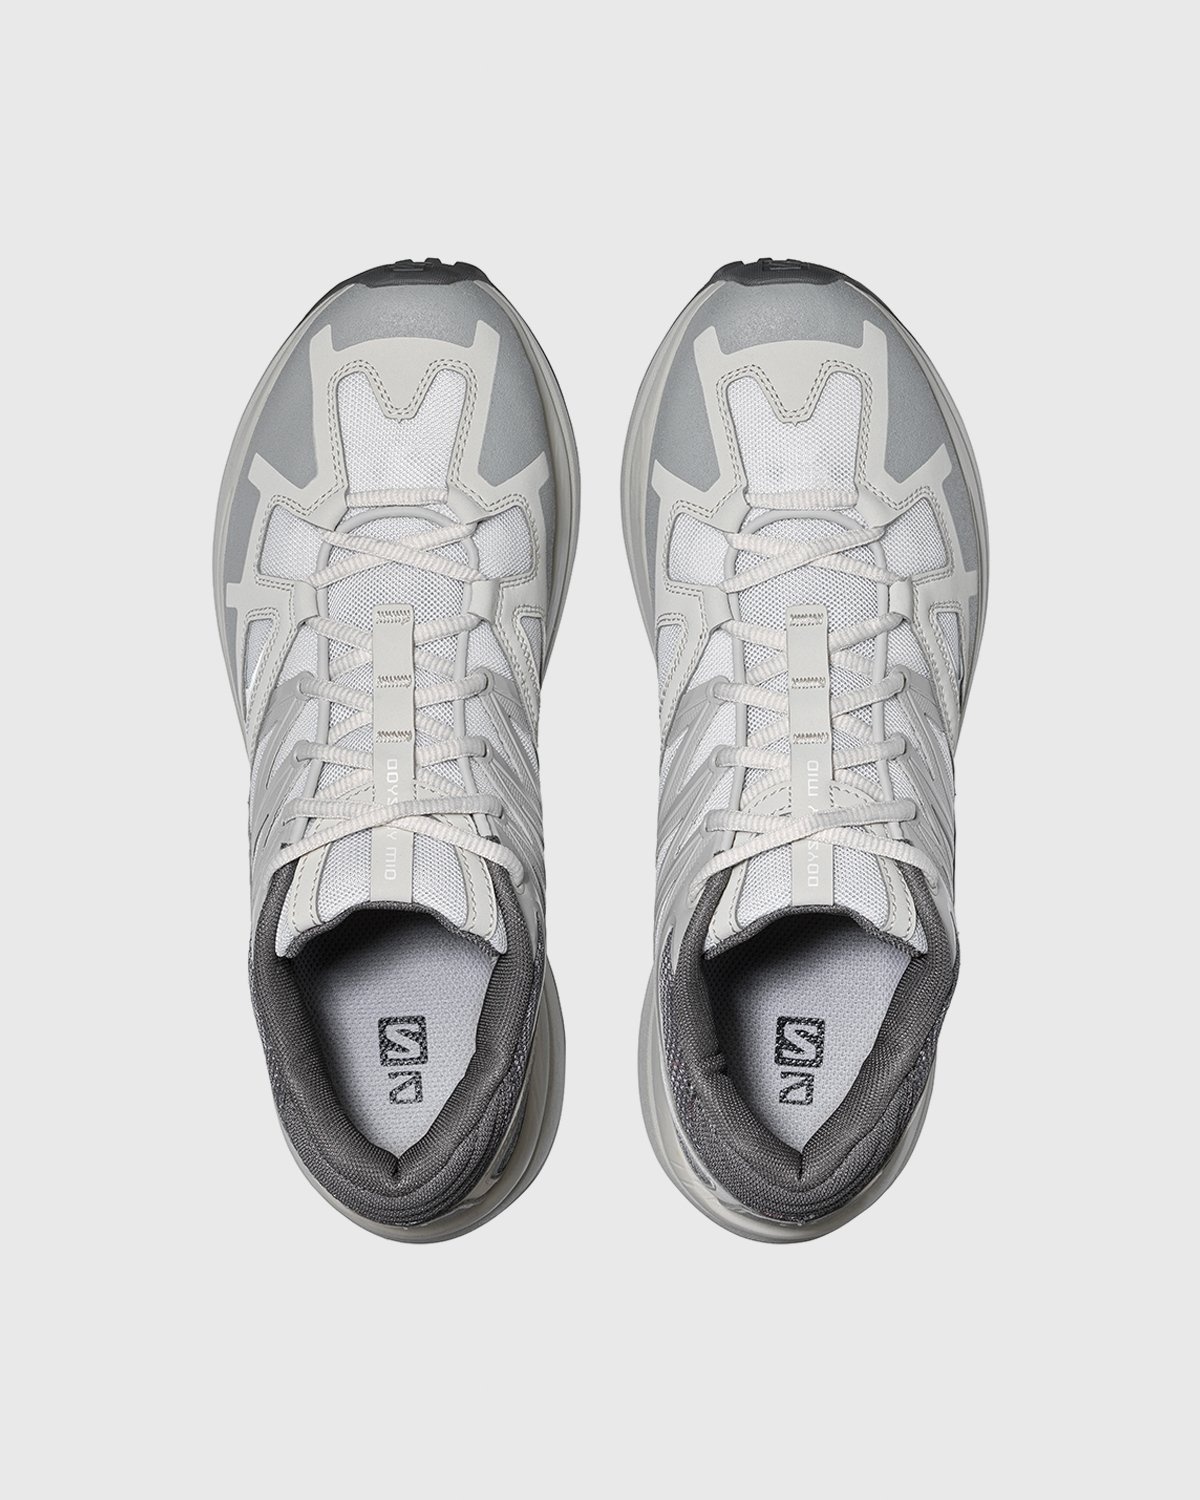 Salomon – Odyssey 1 Advanced Grey - Low Top Sneakers - Grey - Image 4